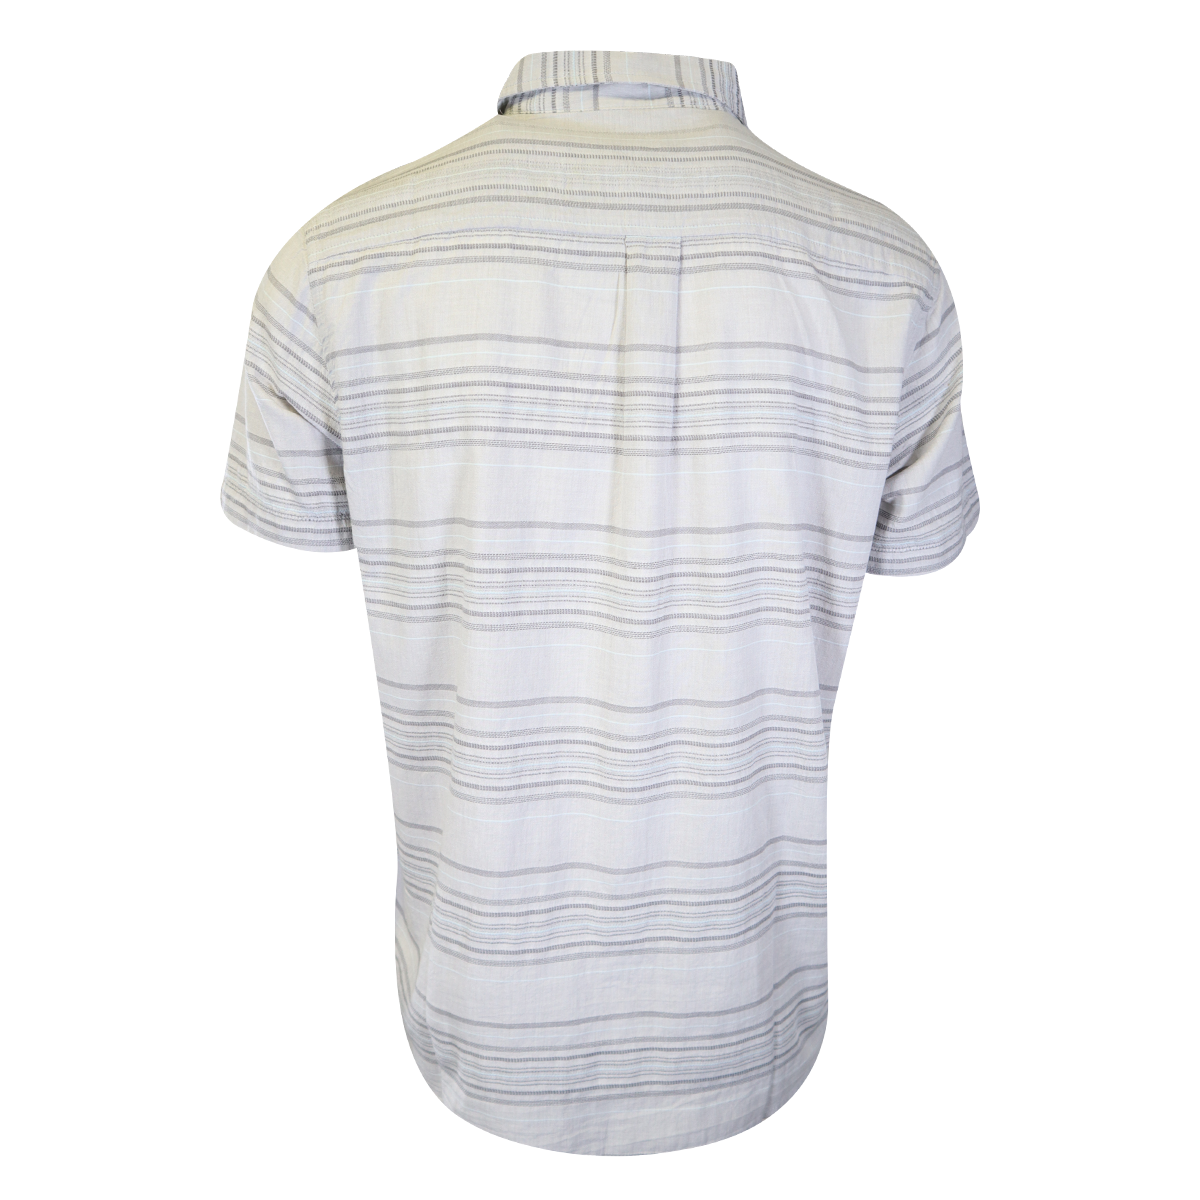 O'Neill Men's Shirt White Seafaring Grey Blue Line Stripe Pocket S/S (S10)